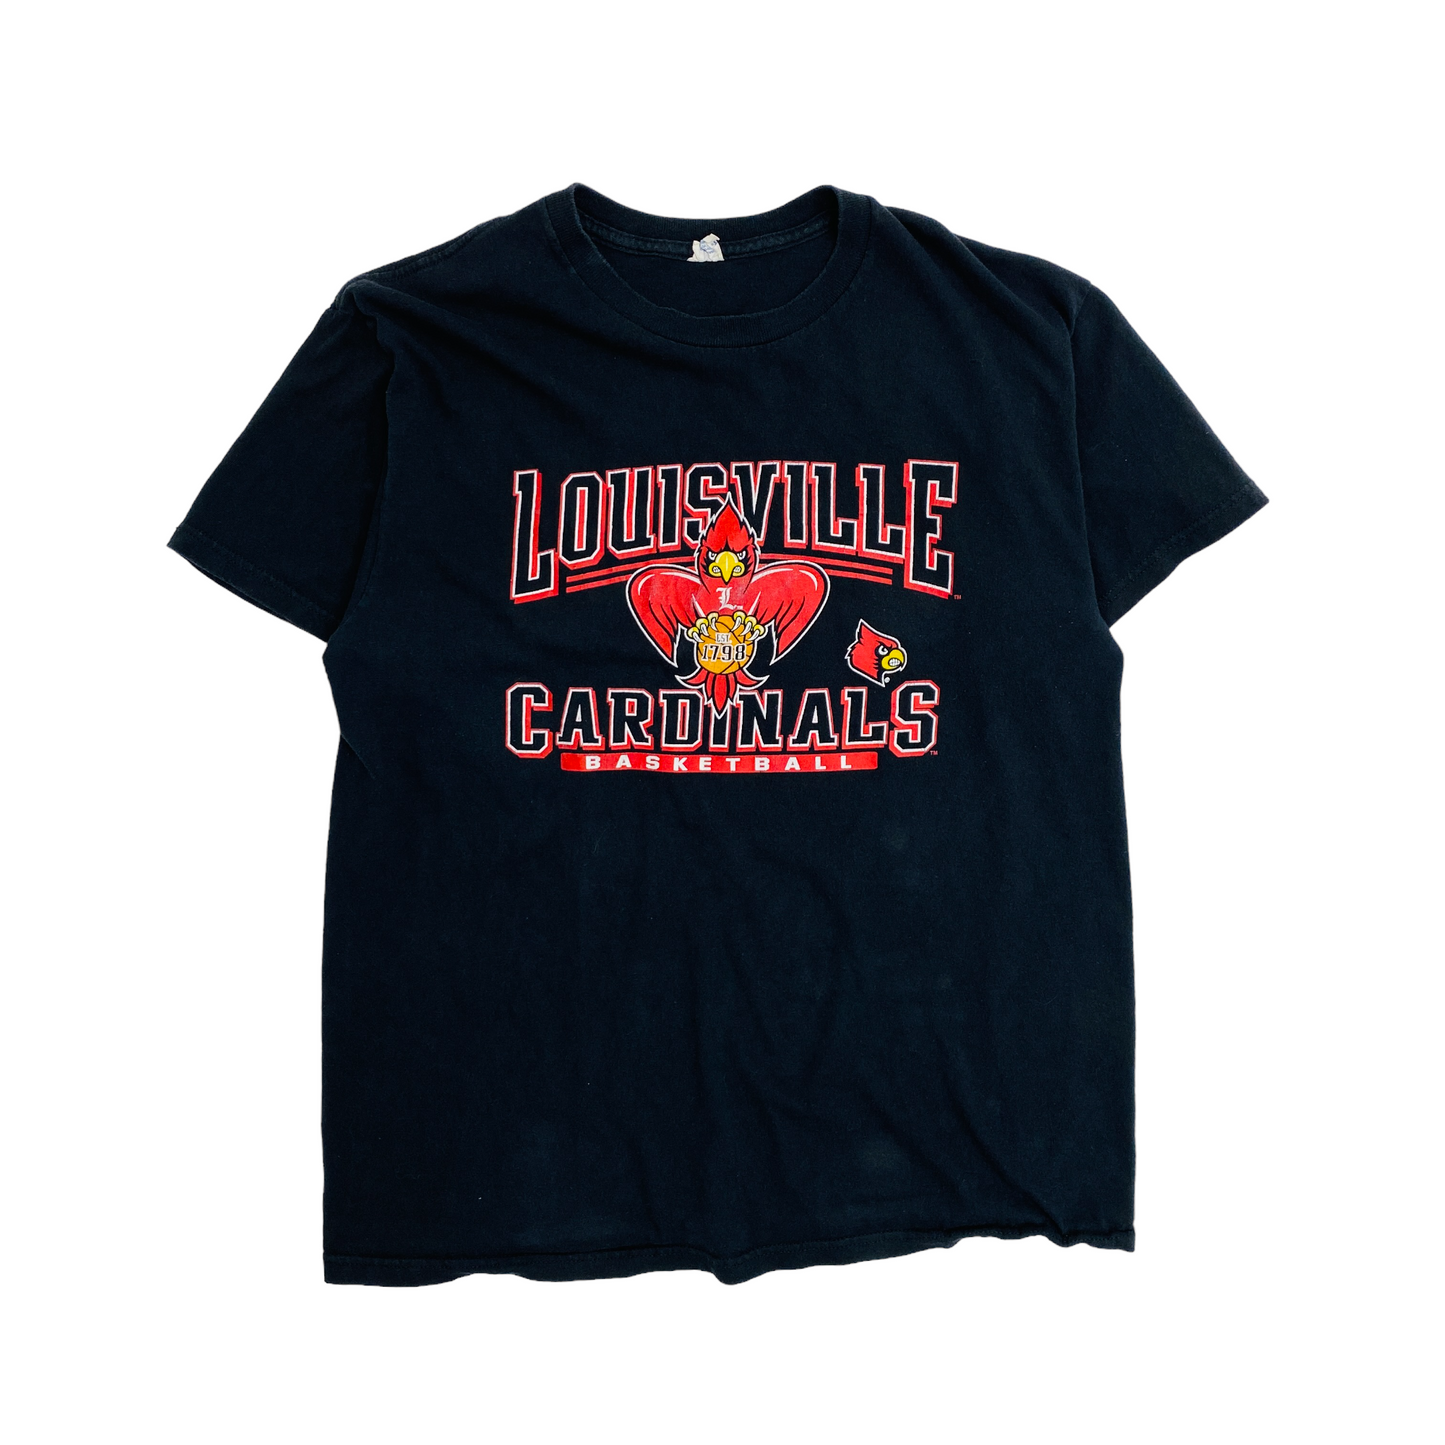 Vintage Louisville Cardinals College Basketball Jersey Vest White Medium, Vintage Online